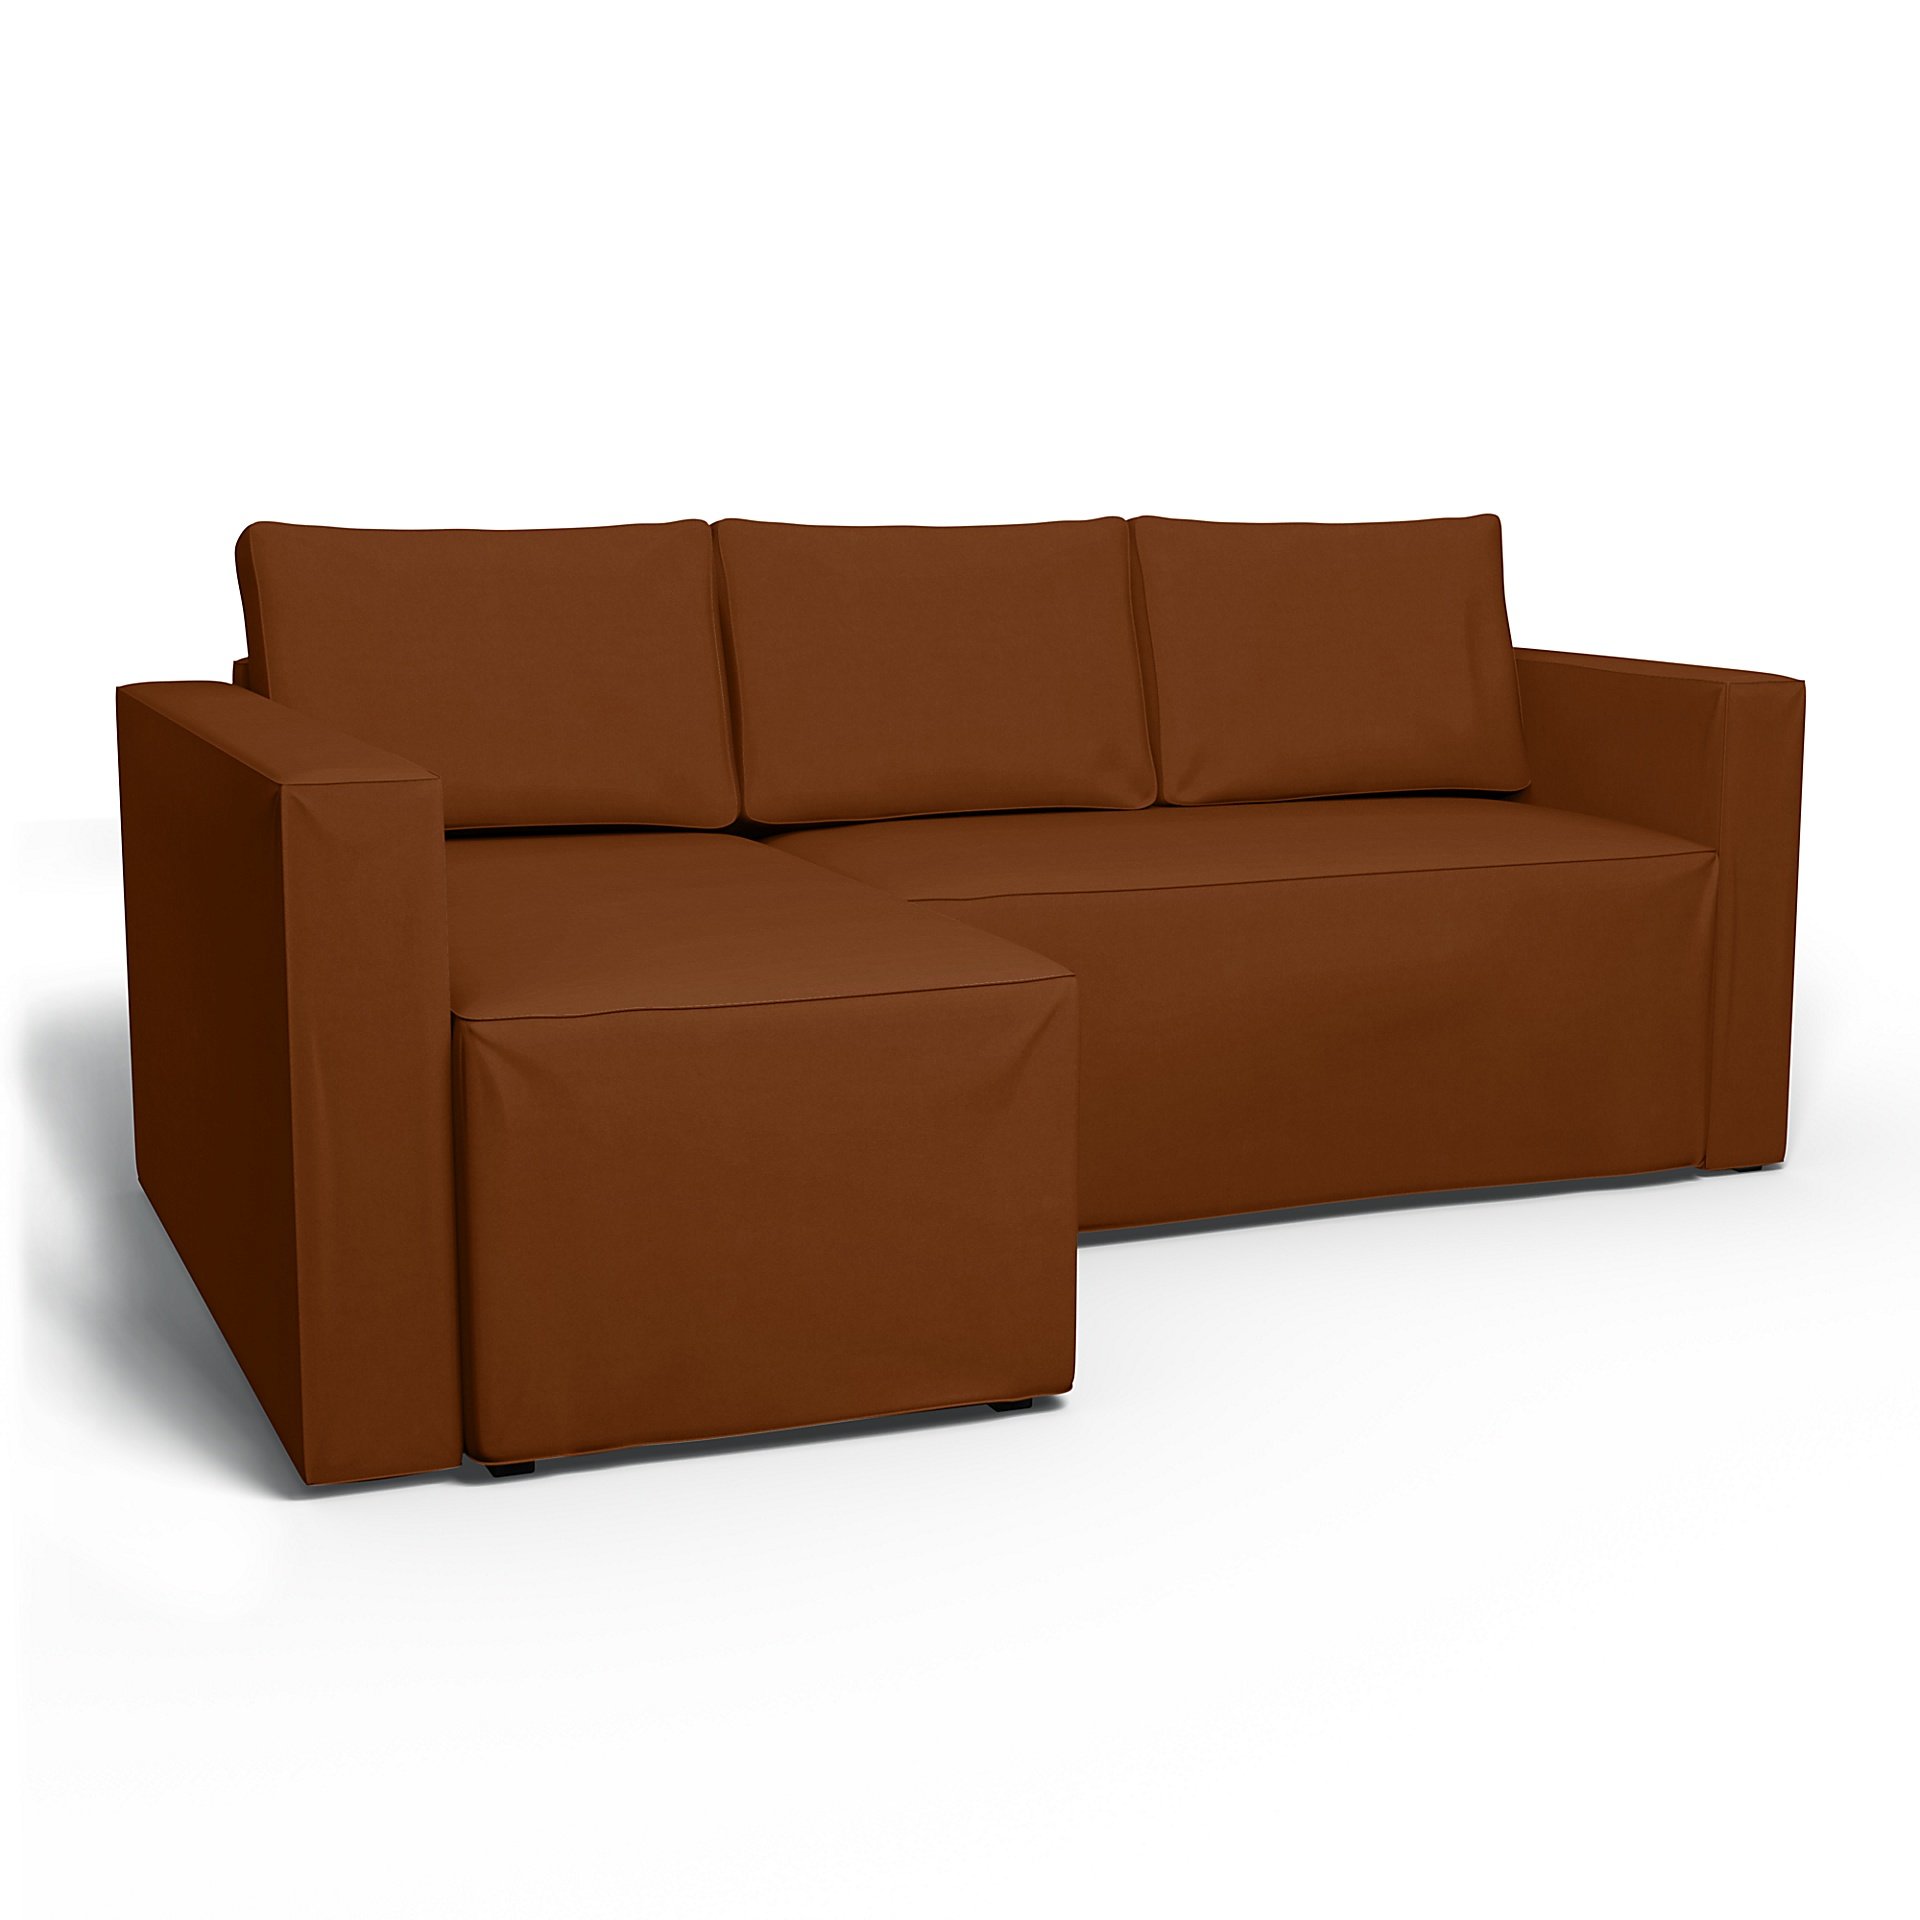 IKEA - Manstad Sofa Bed with Left Chaise Cover, Cinnamon, Velvet - Bemz